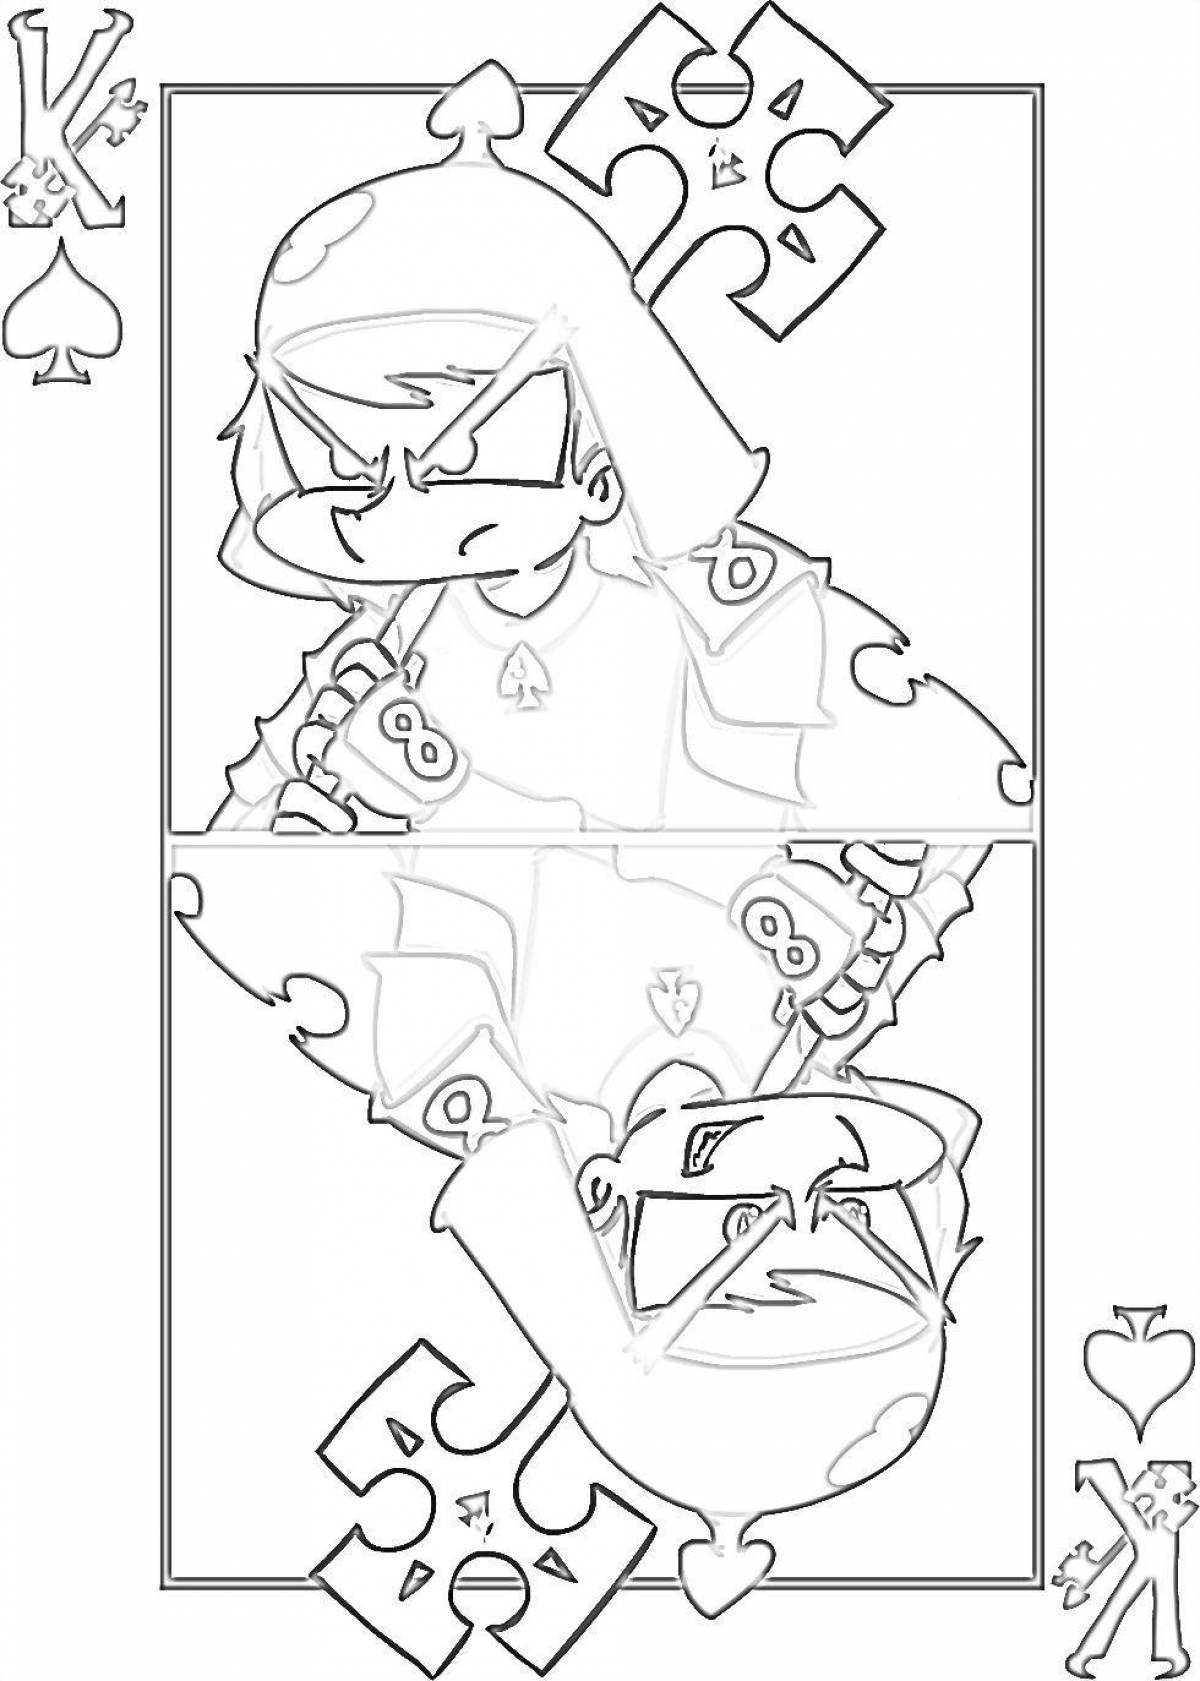 Fun coloring mafia 13 cards